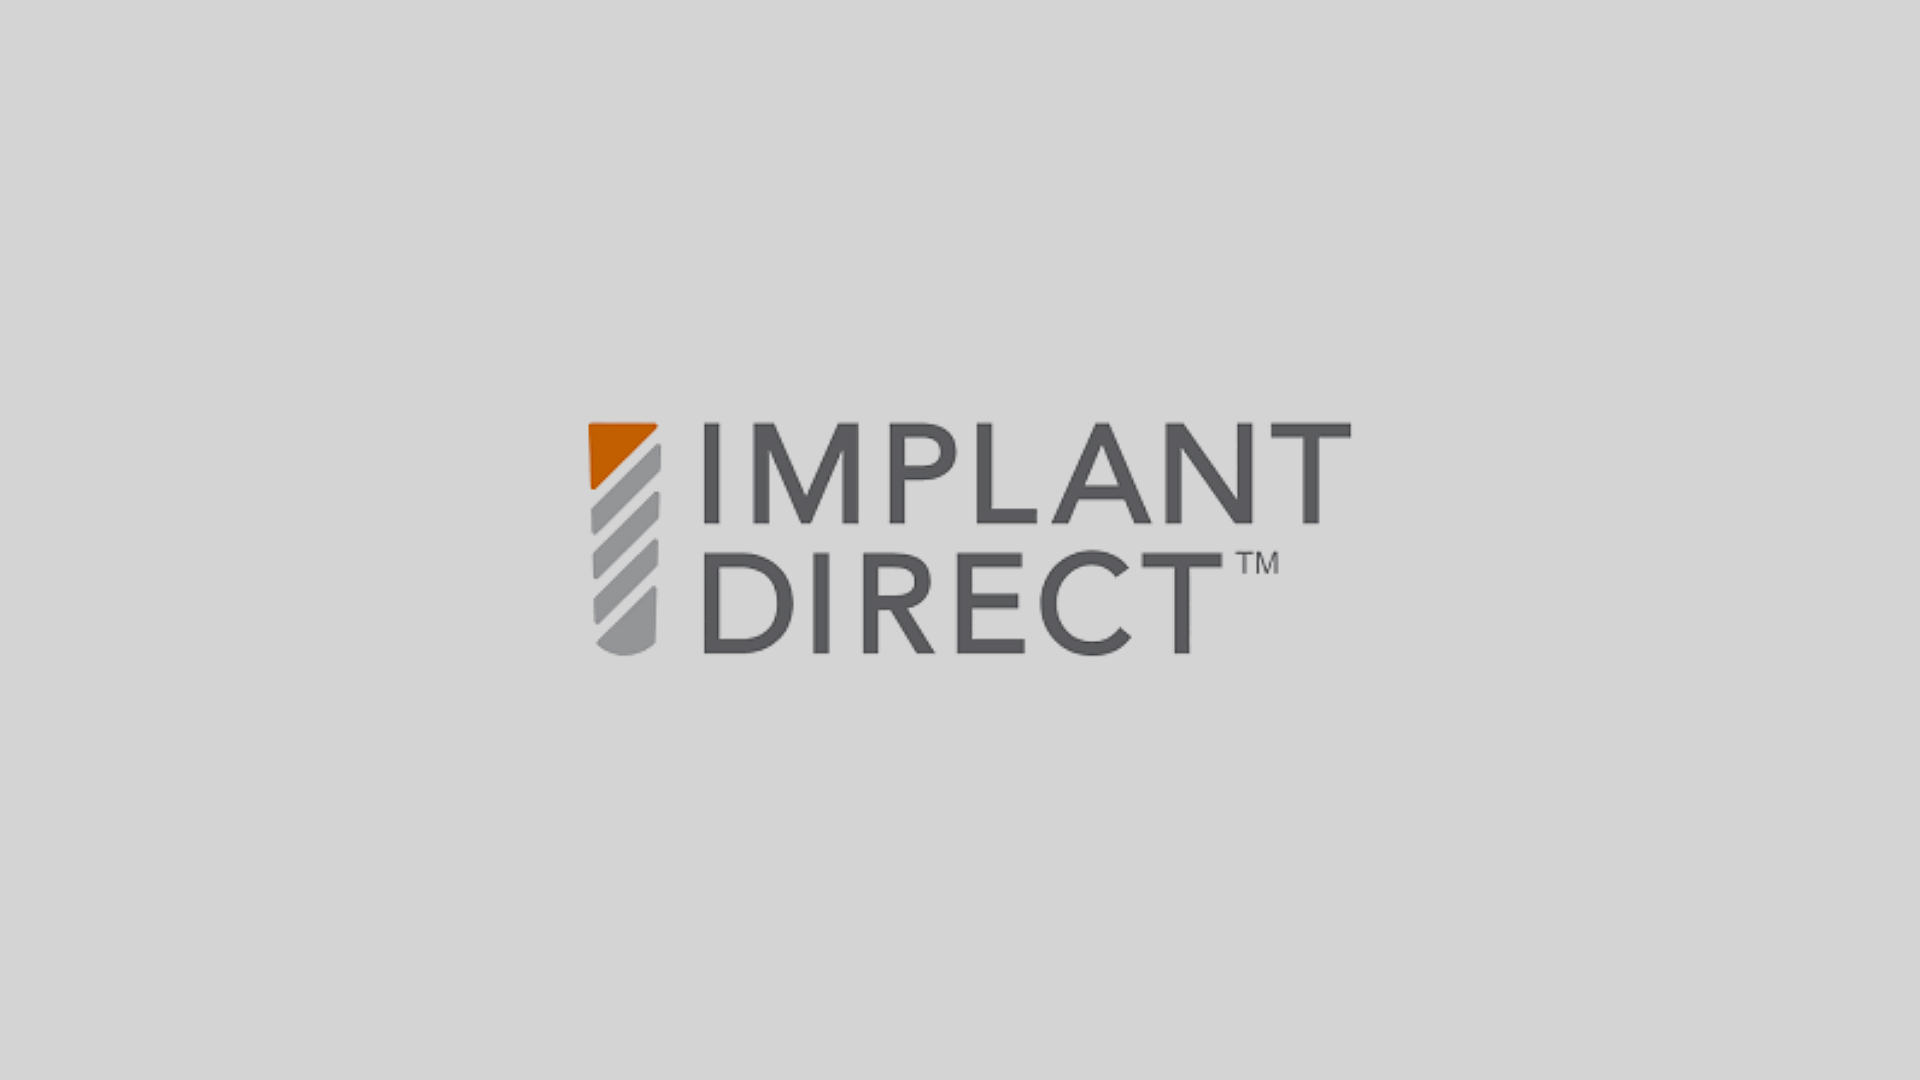 Implant direct